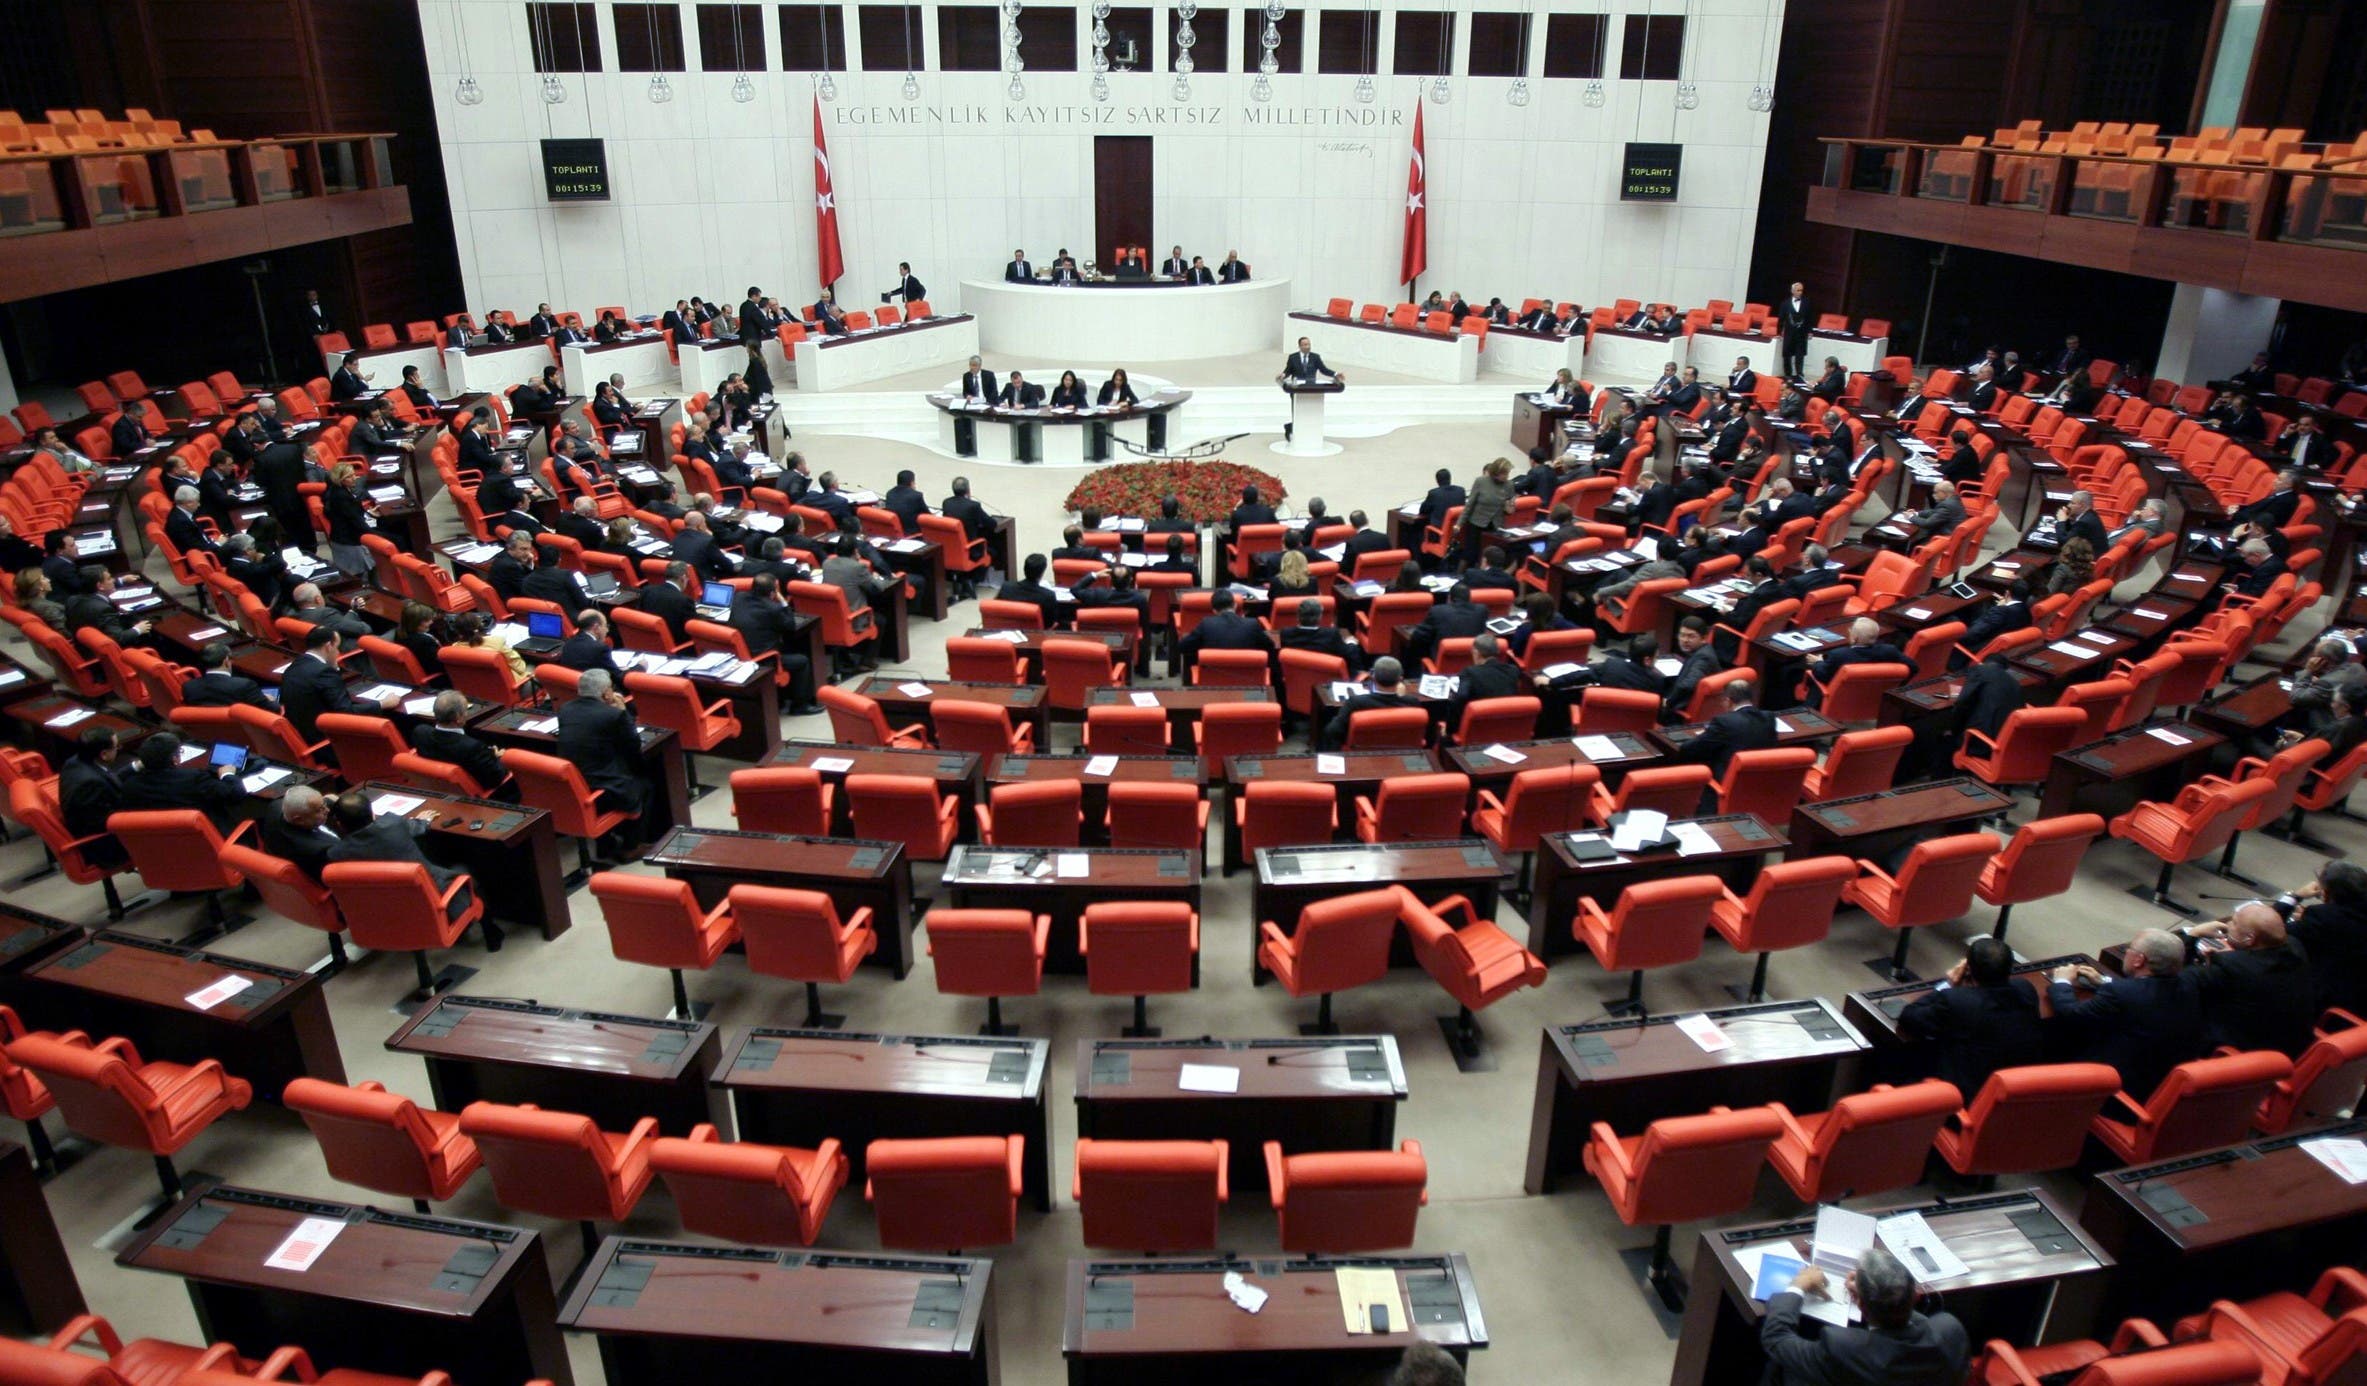 برلمان تركيا